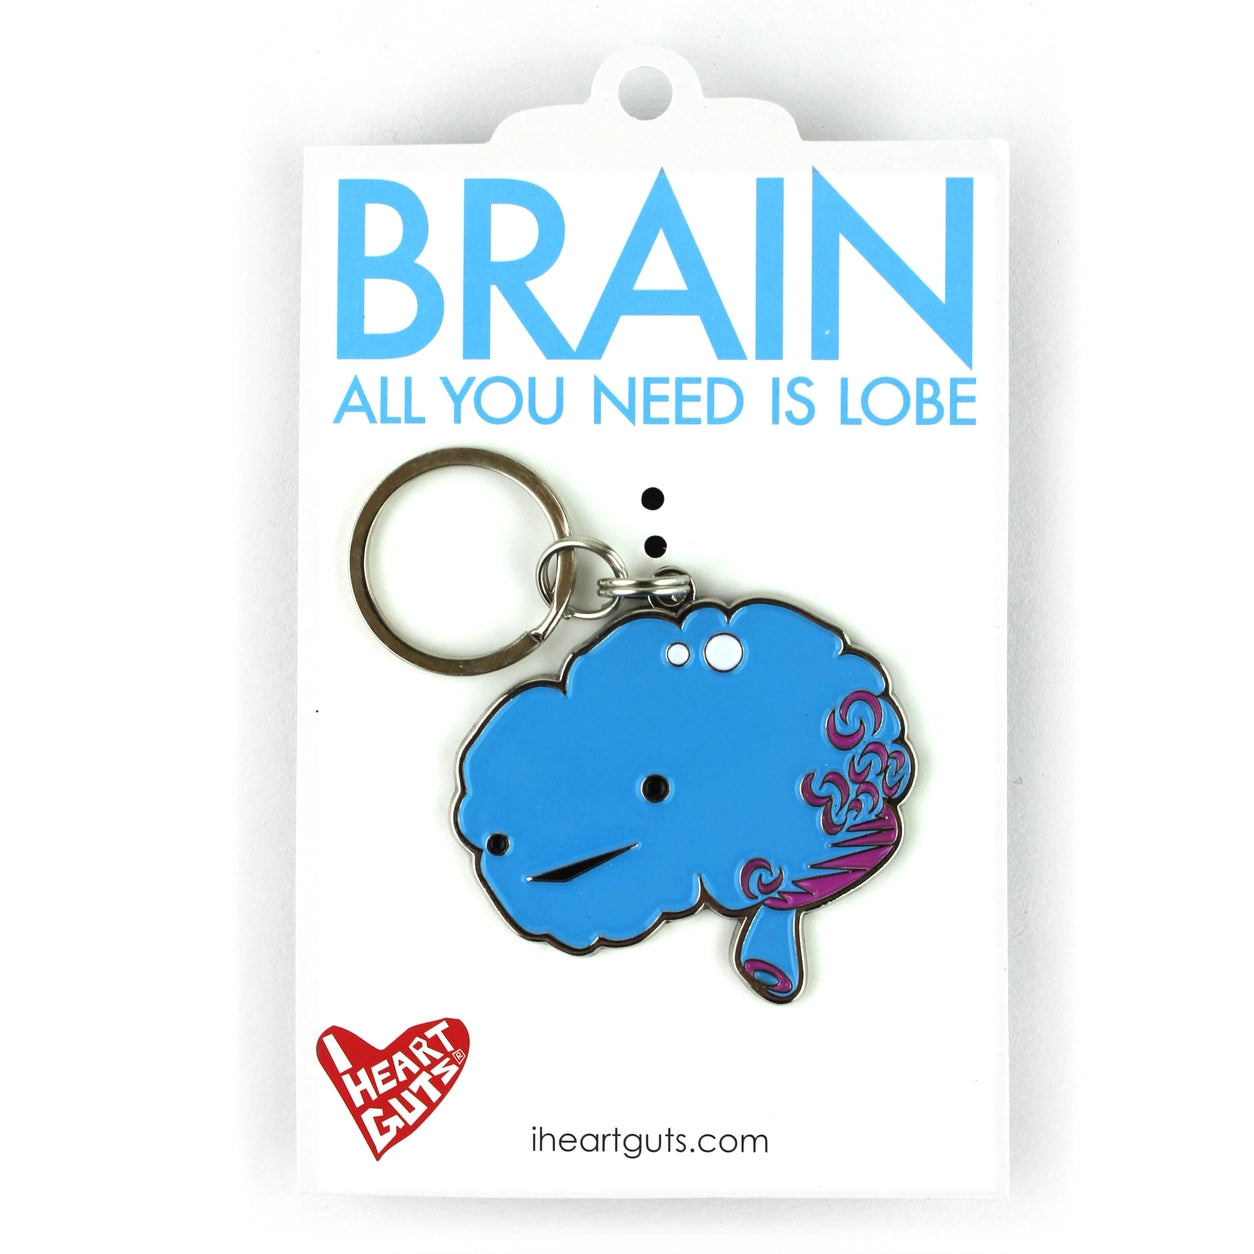 Sleutelhanger brein - All you need is lobe